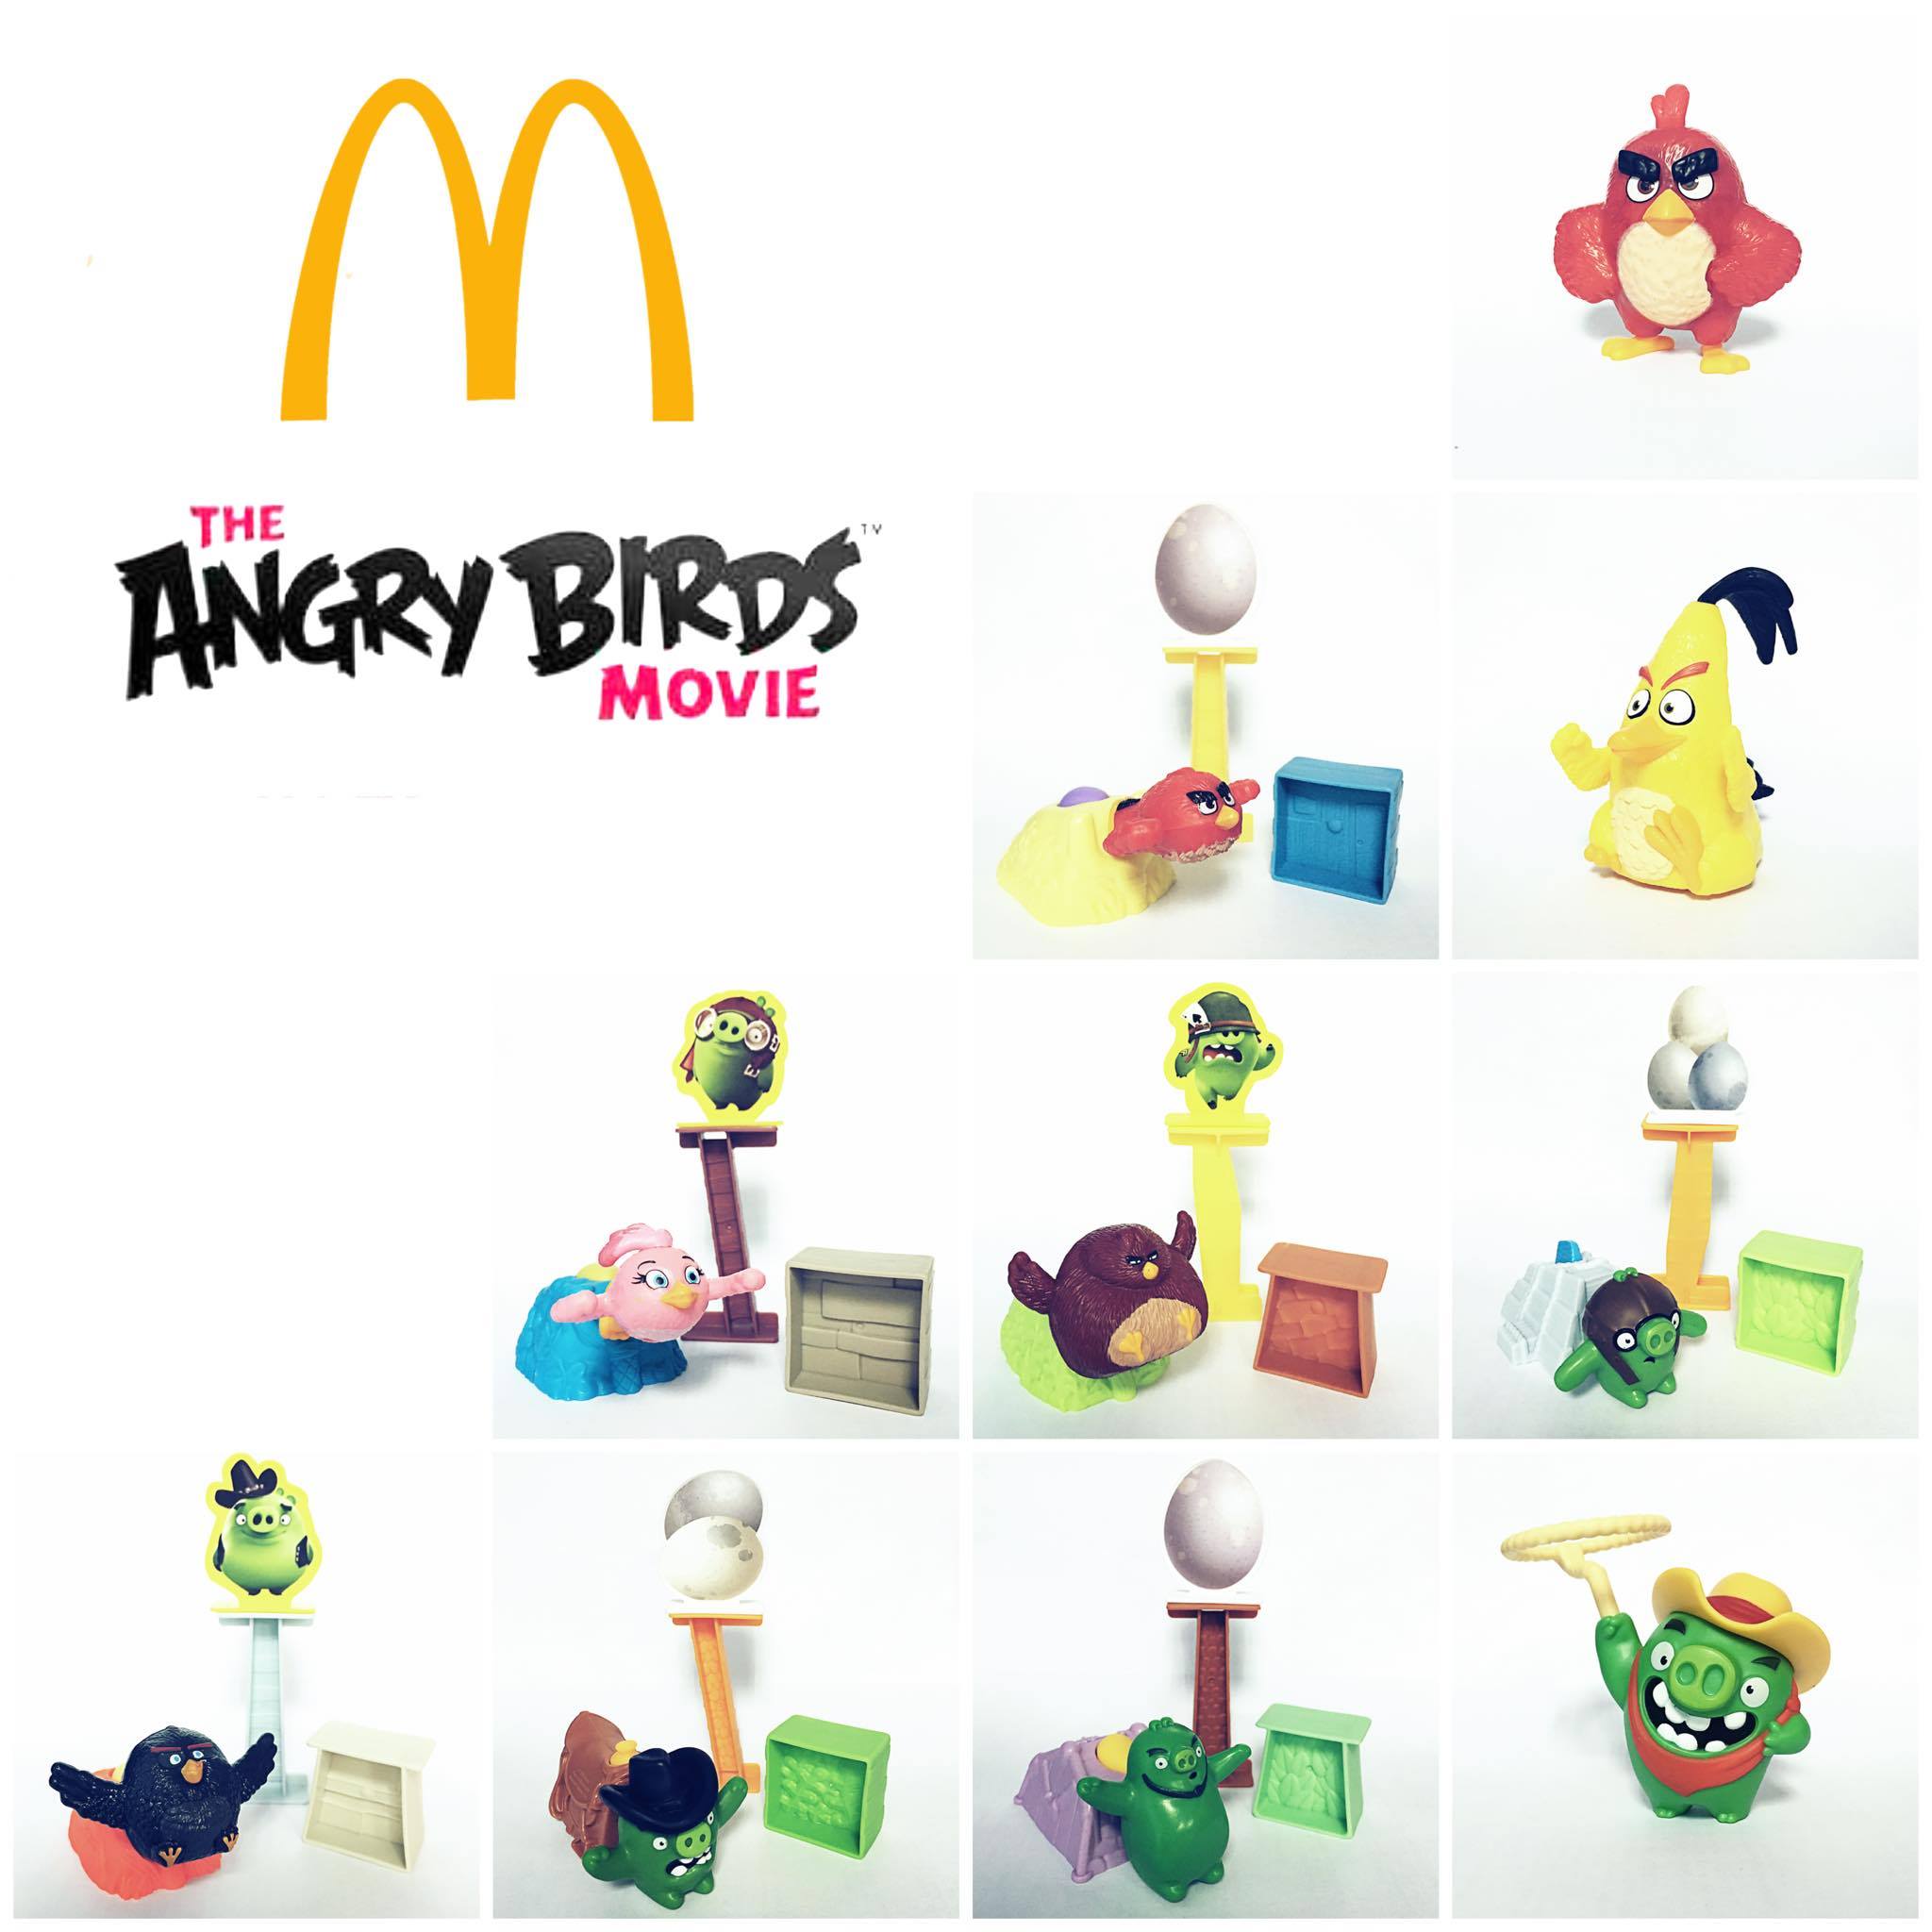 McDonald's Angry Birds Movie Happy Meal toys